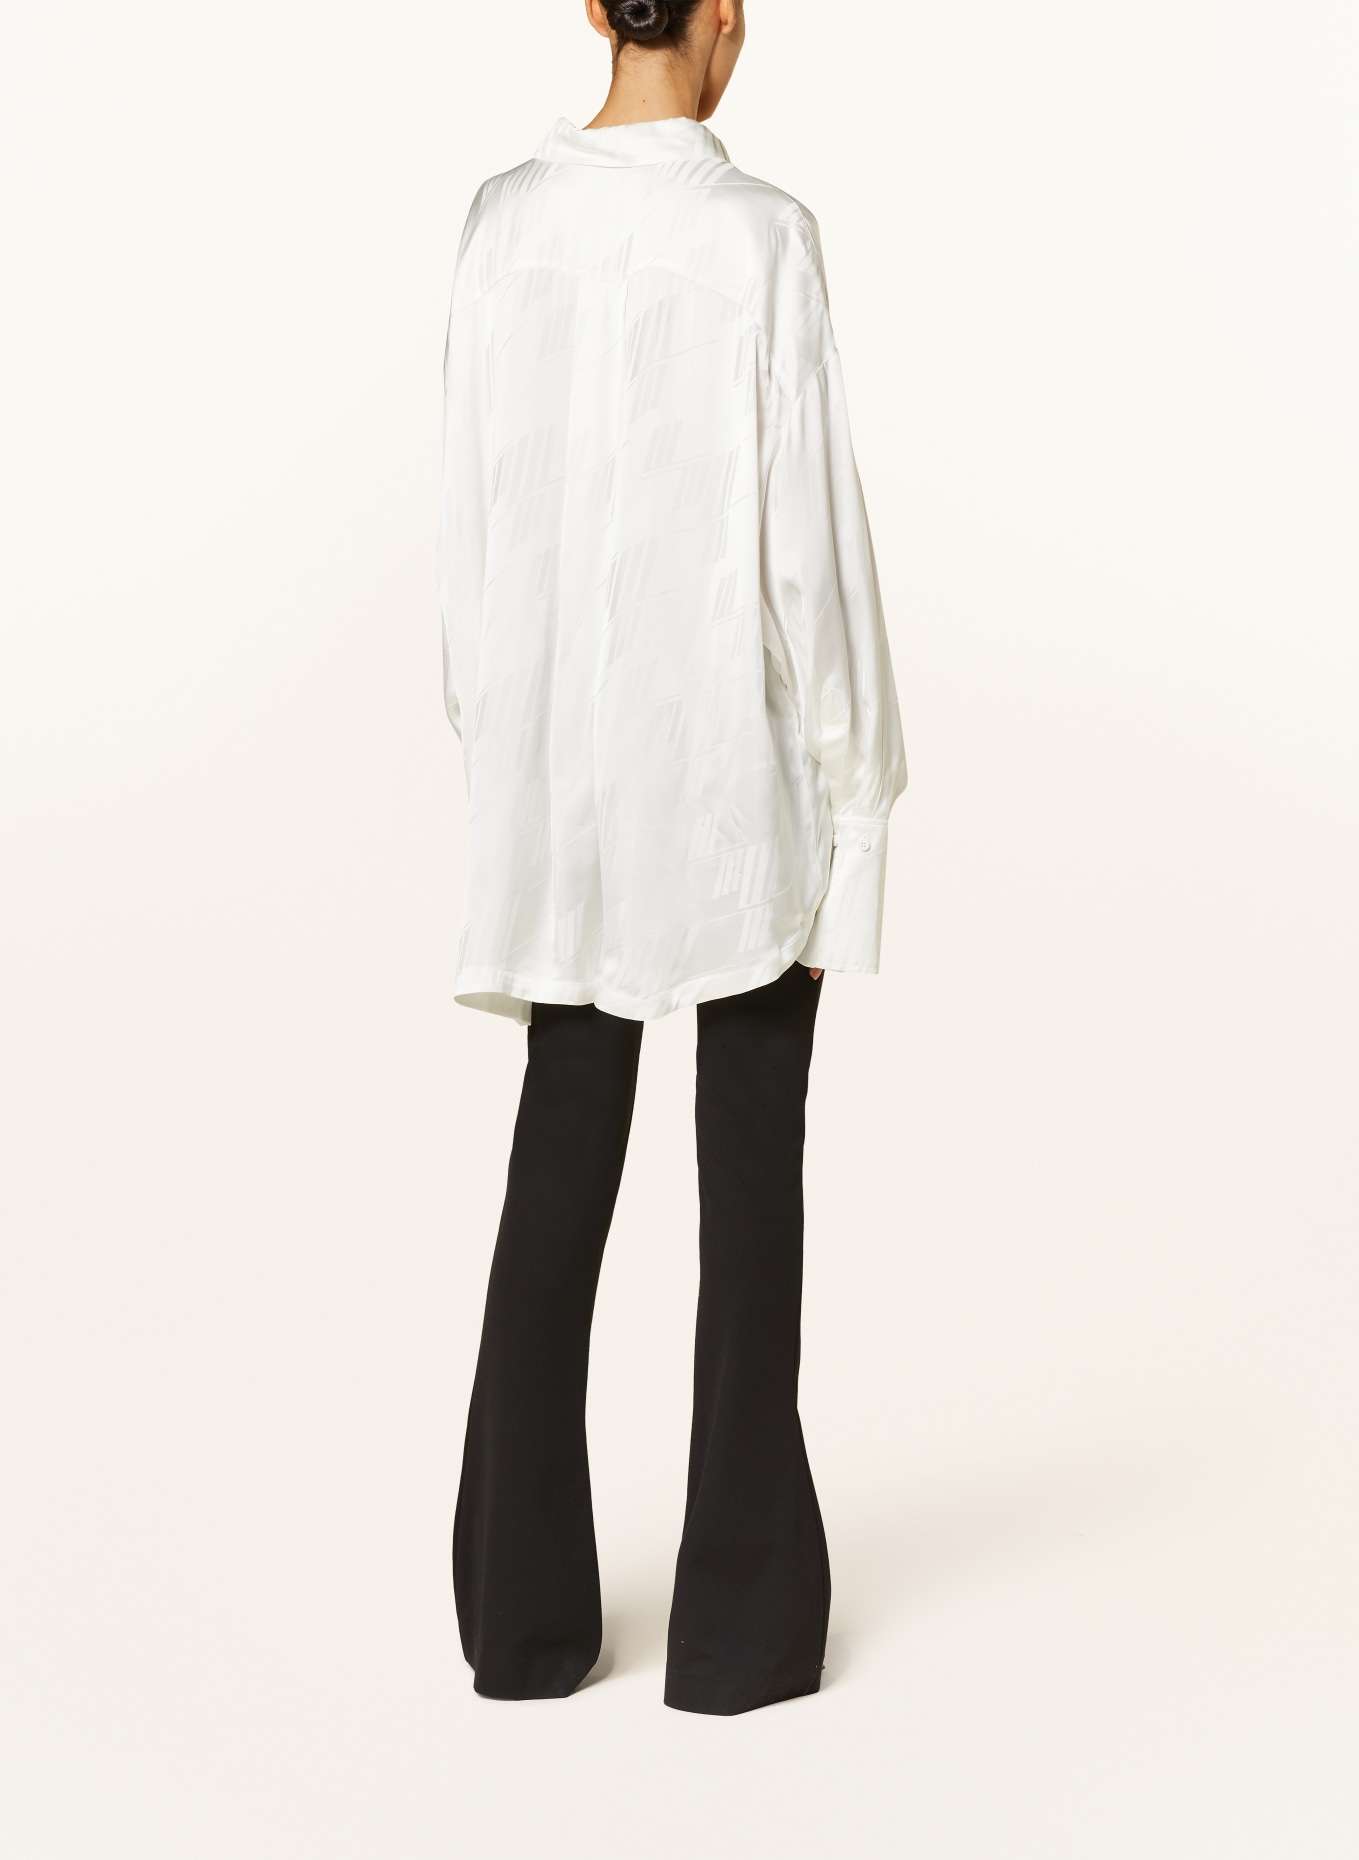 THE ATTICO Oversized shirt blouse DIANA made of satin, Color: CREAM (Image 3)